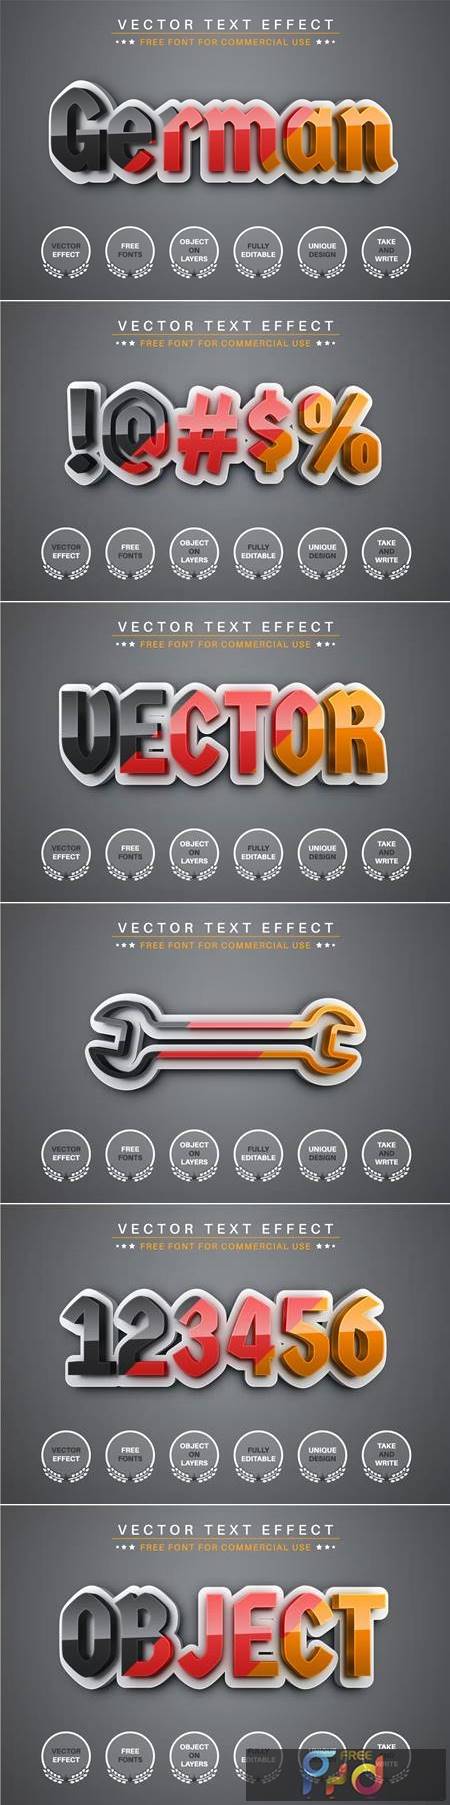 German - Editable Text Effect, Font Style DEHHSDF 1